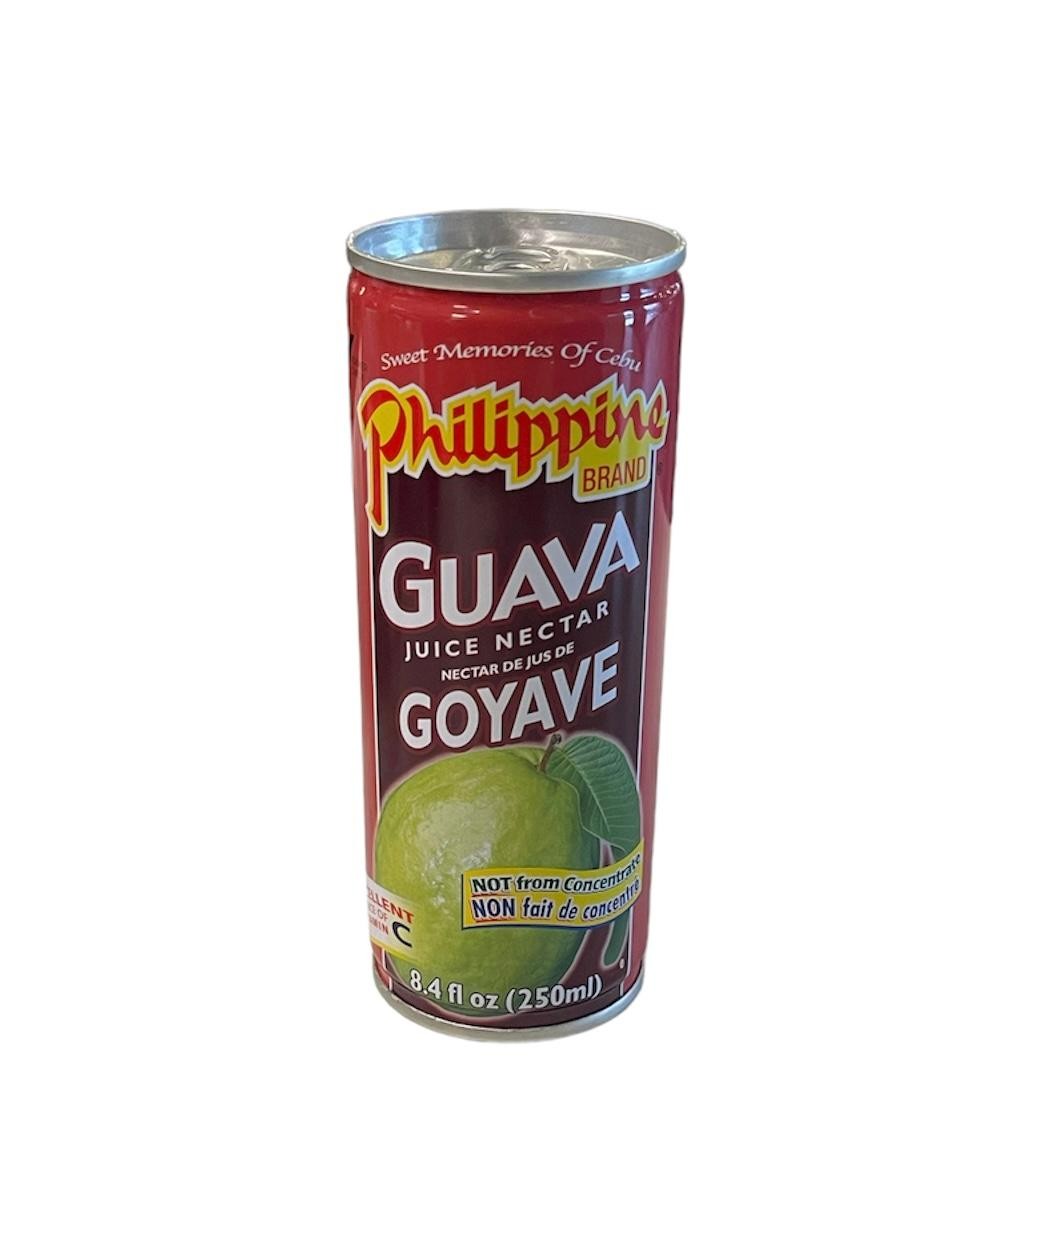 Guava Nectar - Philippines